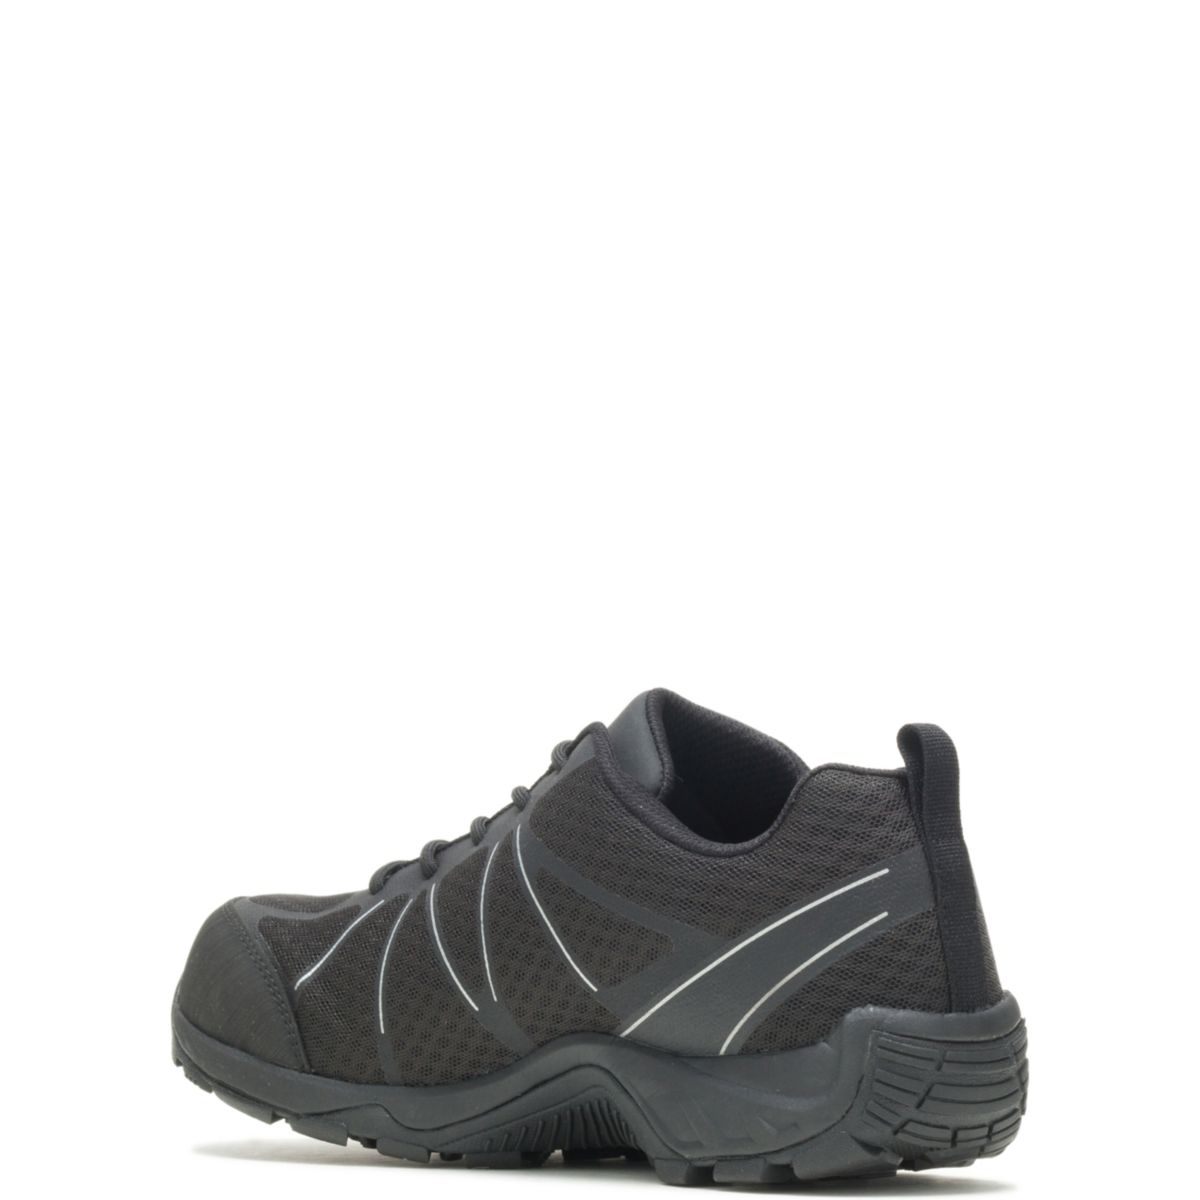 WOLVERINE Men's Amherst II CarbonMAXÂ® Composite Toe Work Shoe Black - W201147 BLACK - BLACK, 8.5